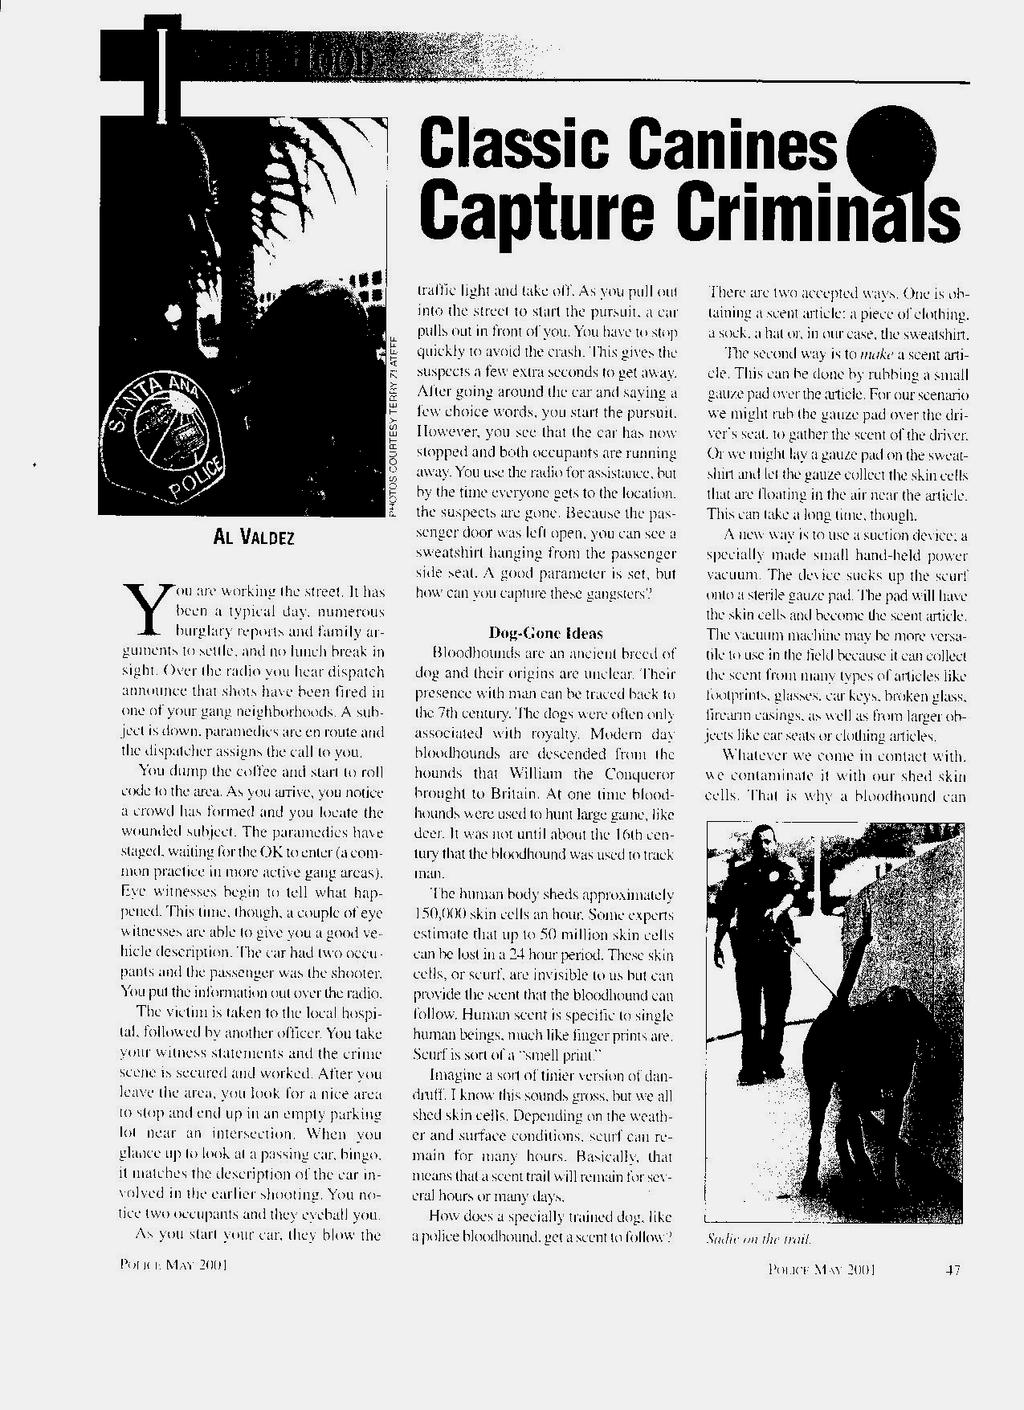 Police Magazine - May